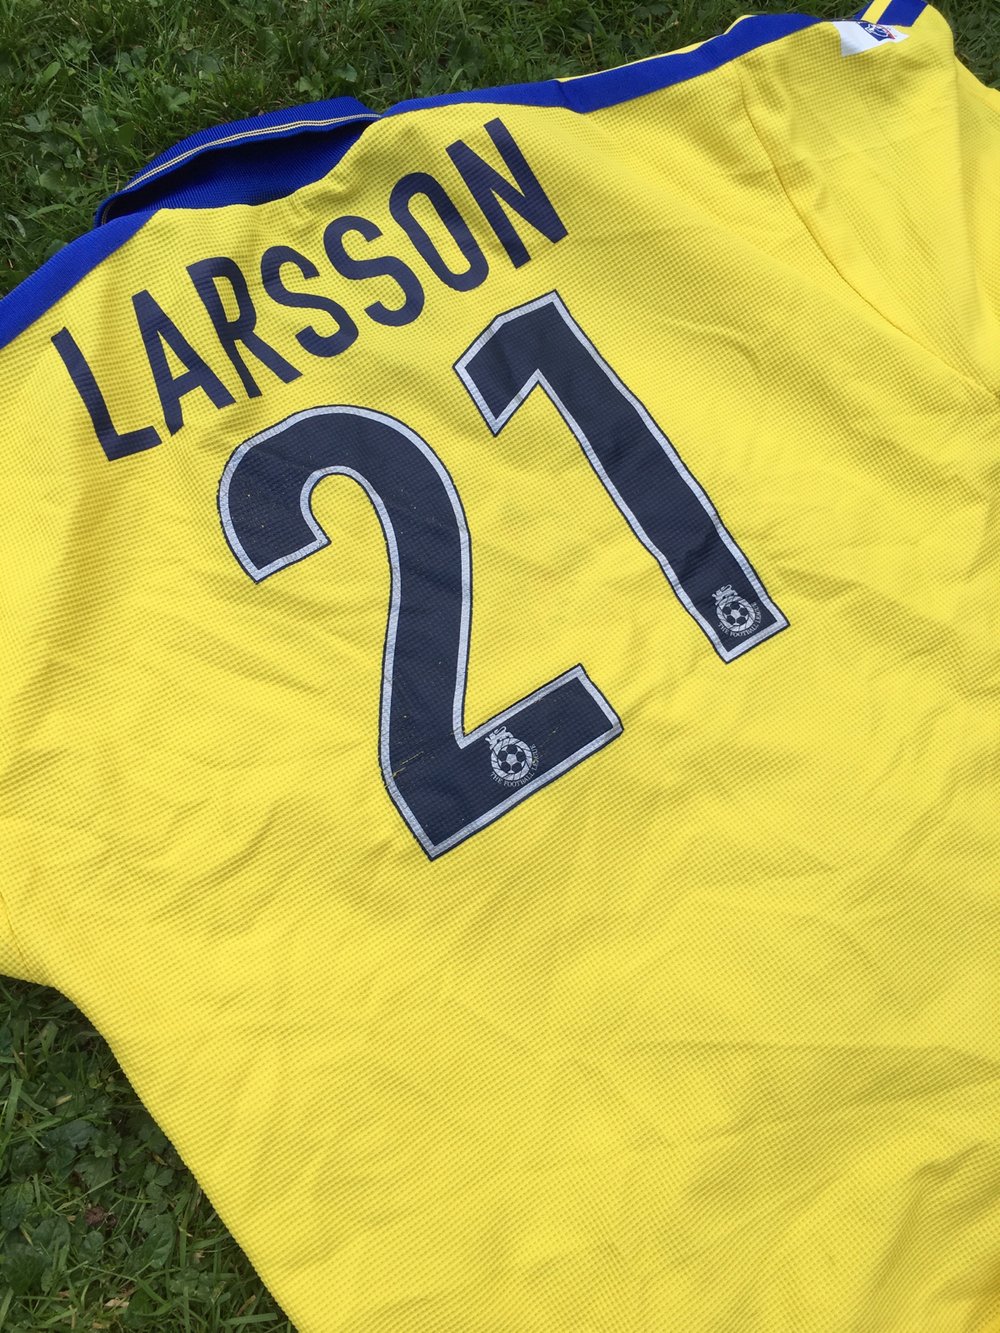 Match Worn 2000/01 Jonas Larsson Away Shirt